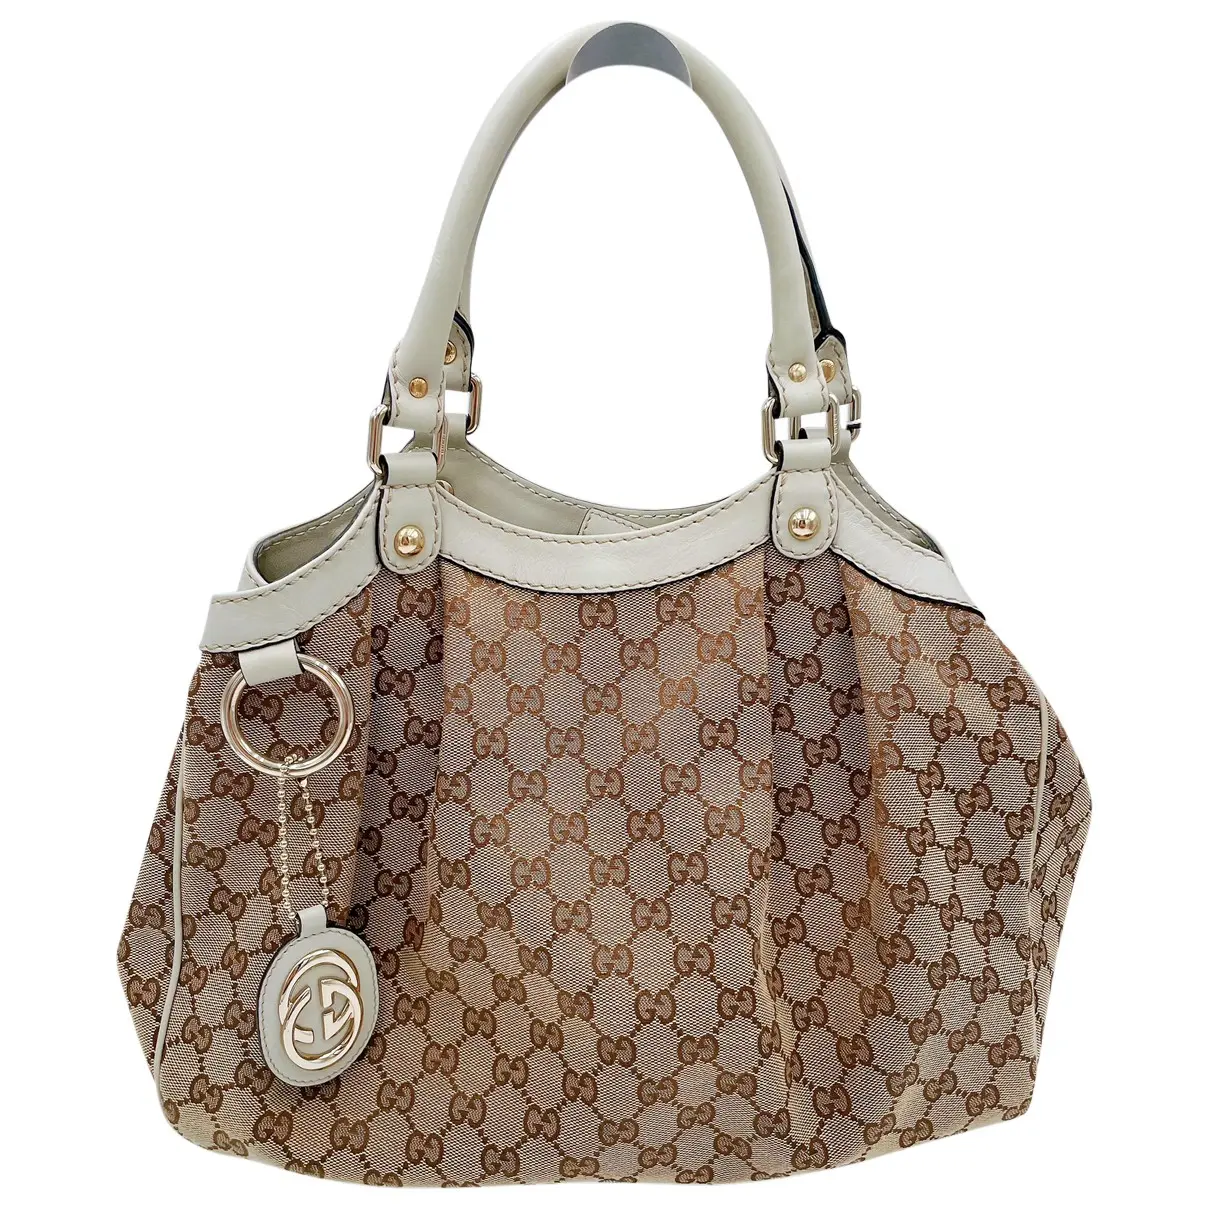 Sukey handbag Gucci